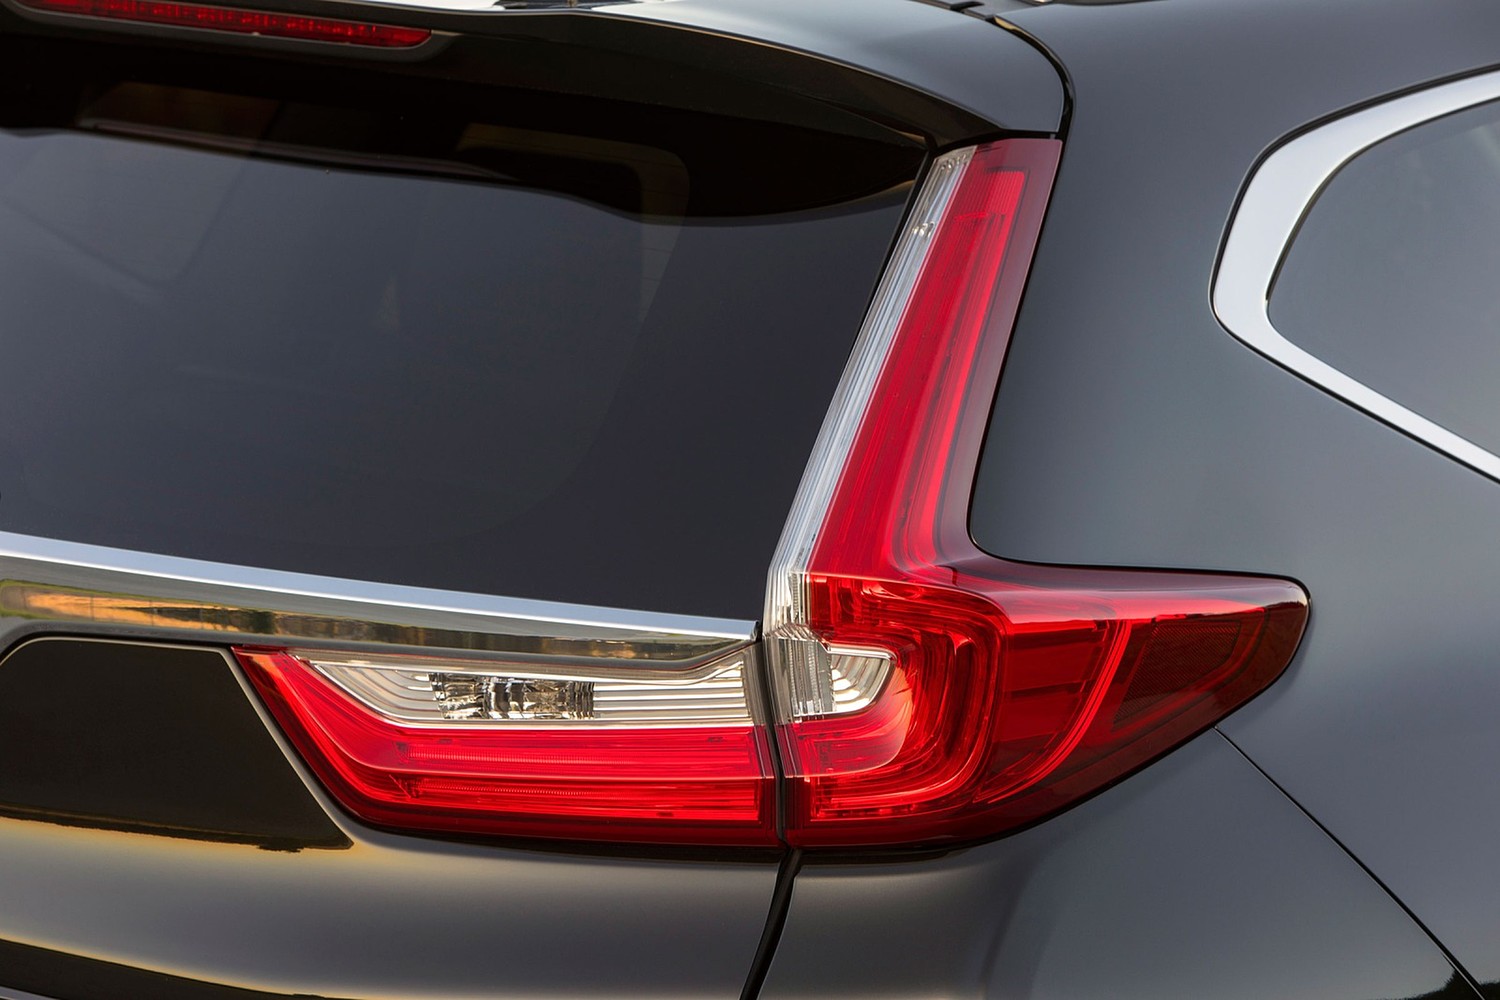 Honda CR-V Touring 4dr SUV Exterior Detail (2017 model year shown)